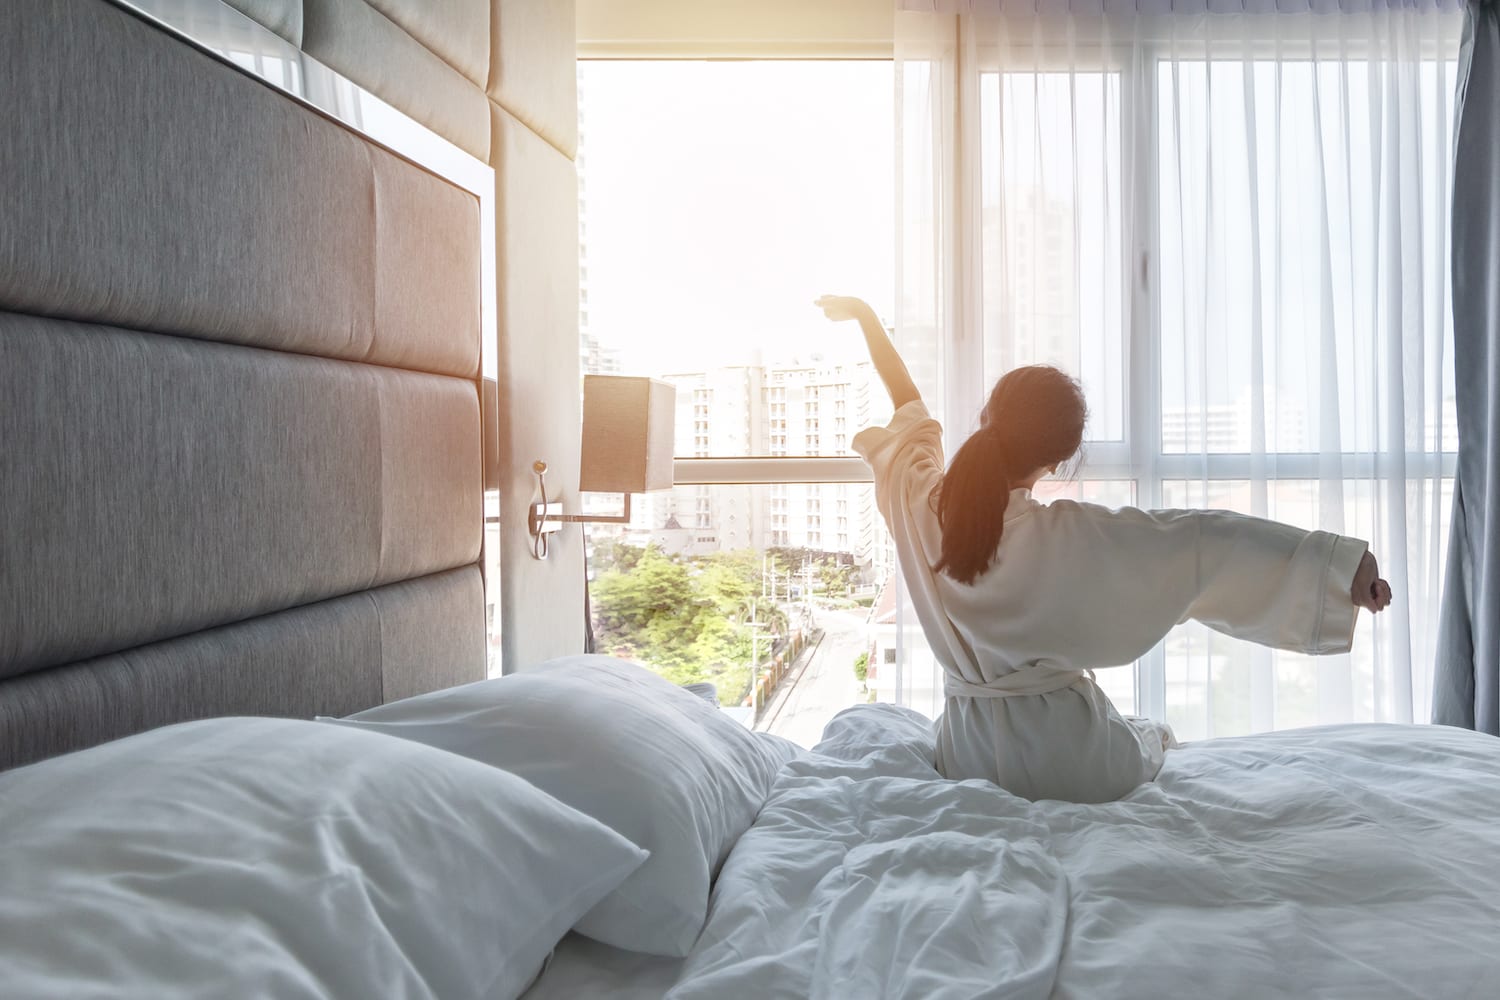 How to Get a Good Nights Sleep in a Hotel Sleep Foundation image